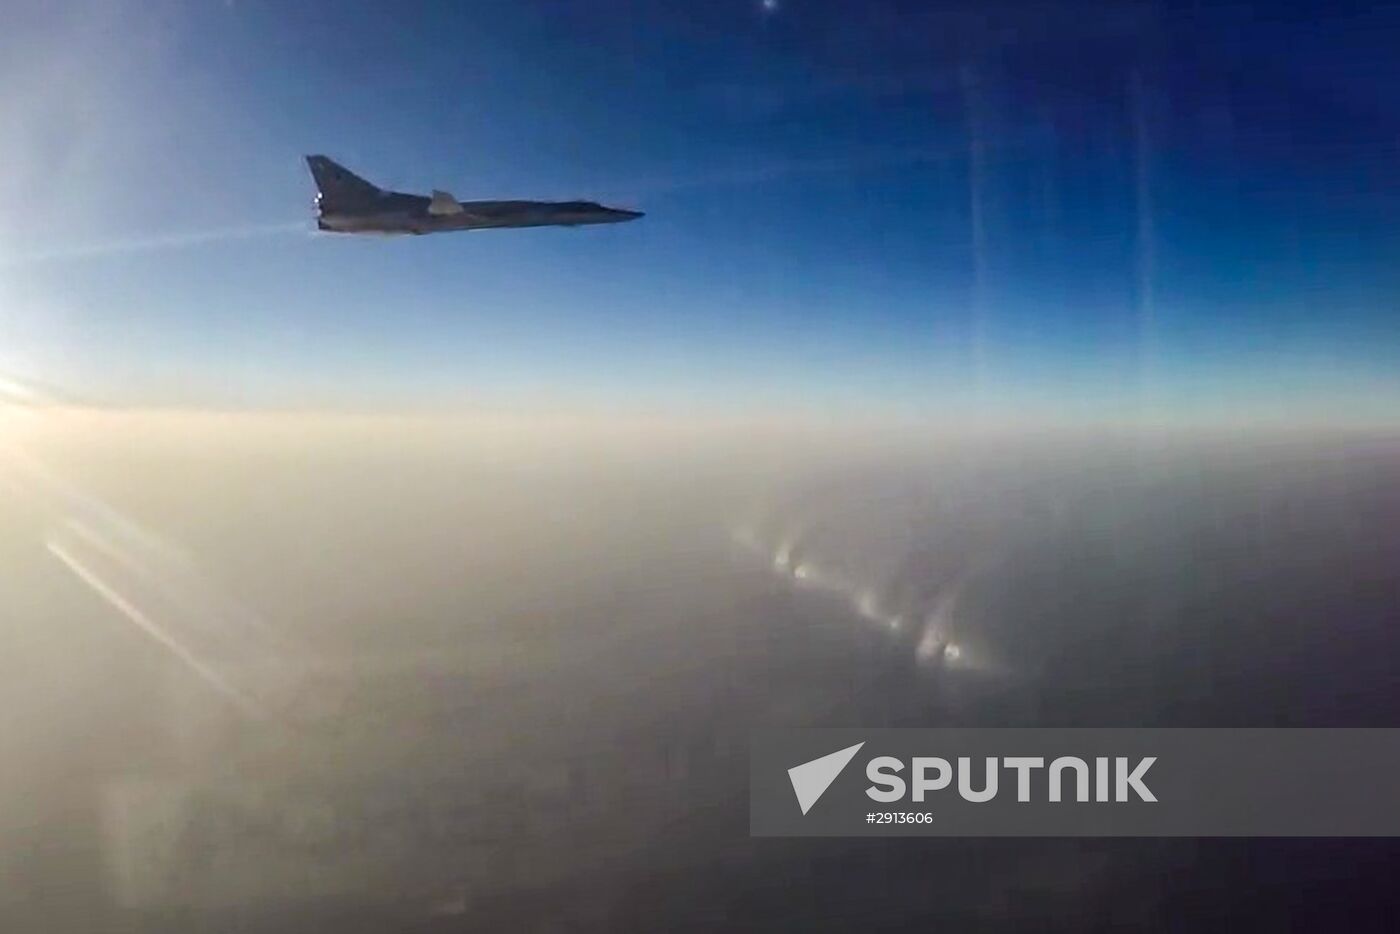 Tupolev Tu-22M3 Backfire bombers hit terrorist targets in Syria